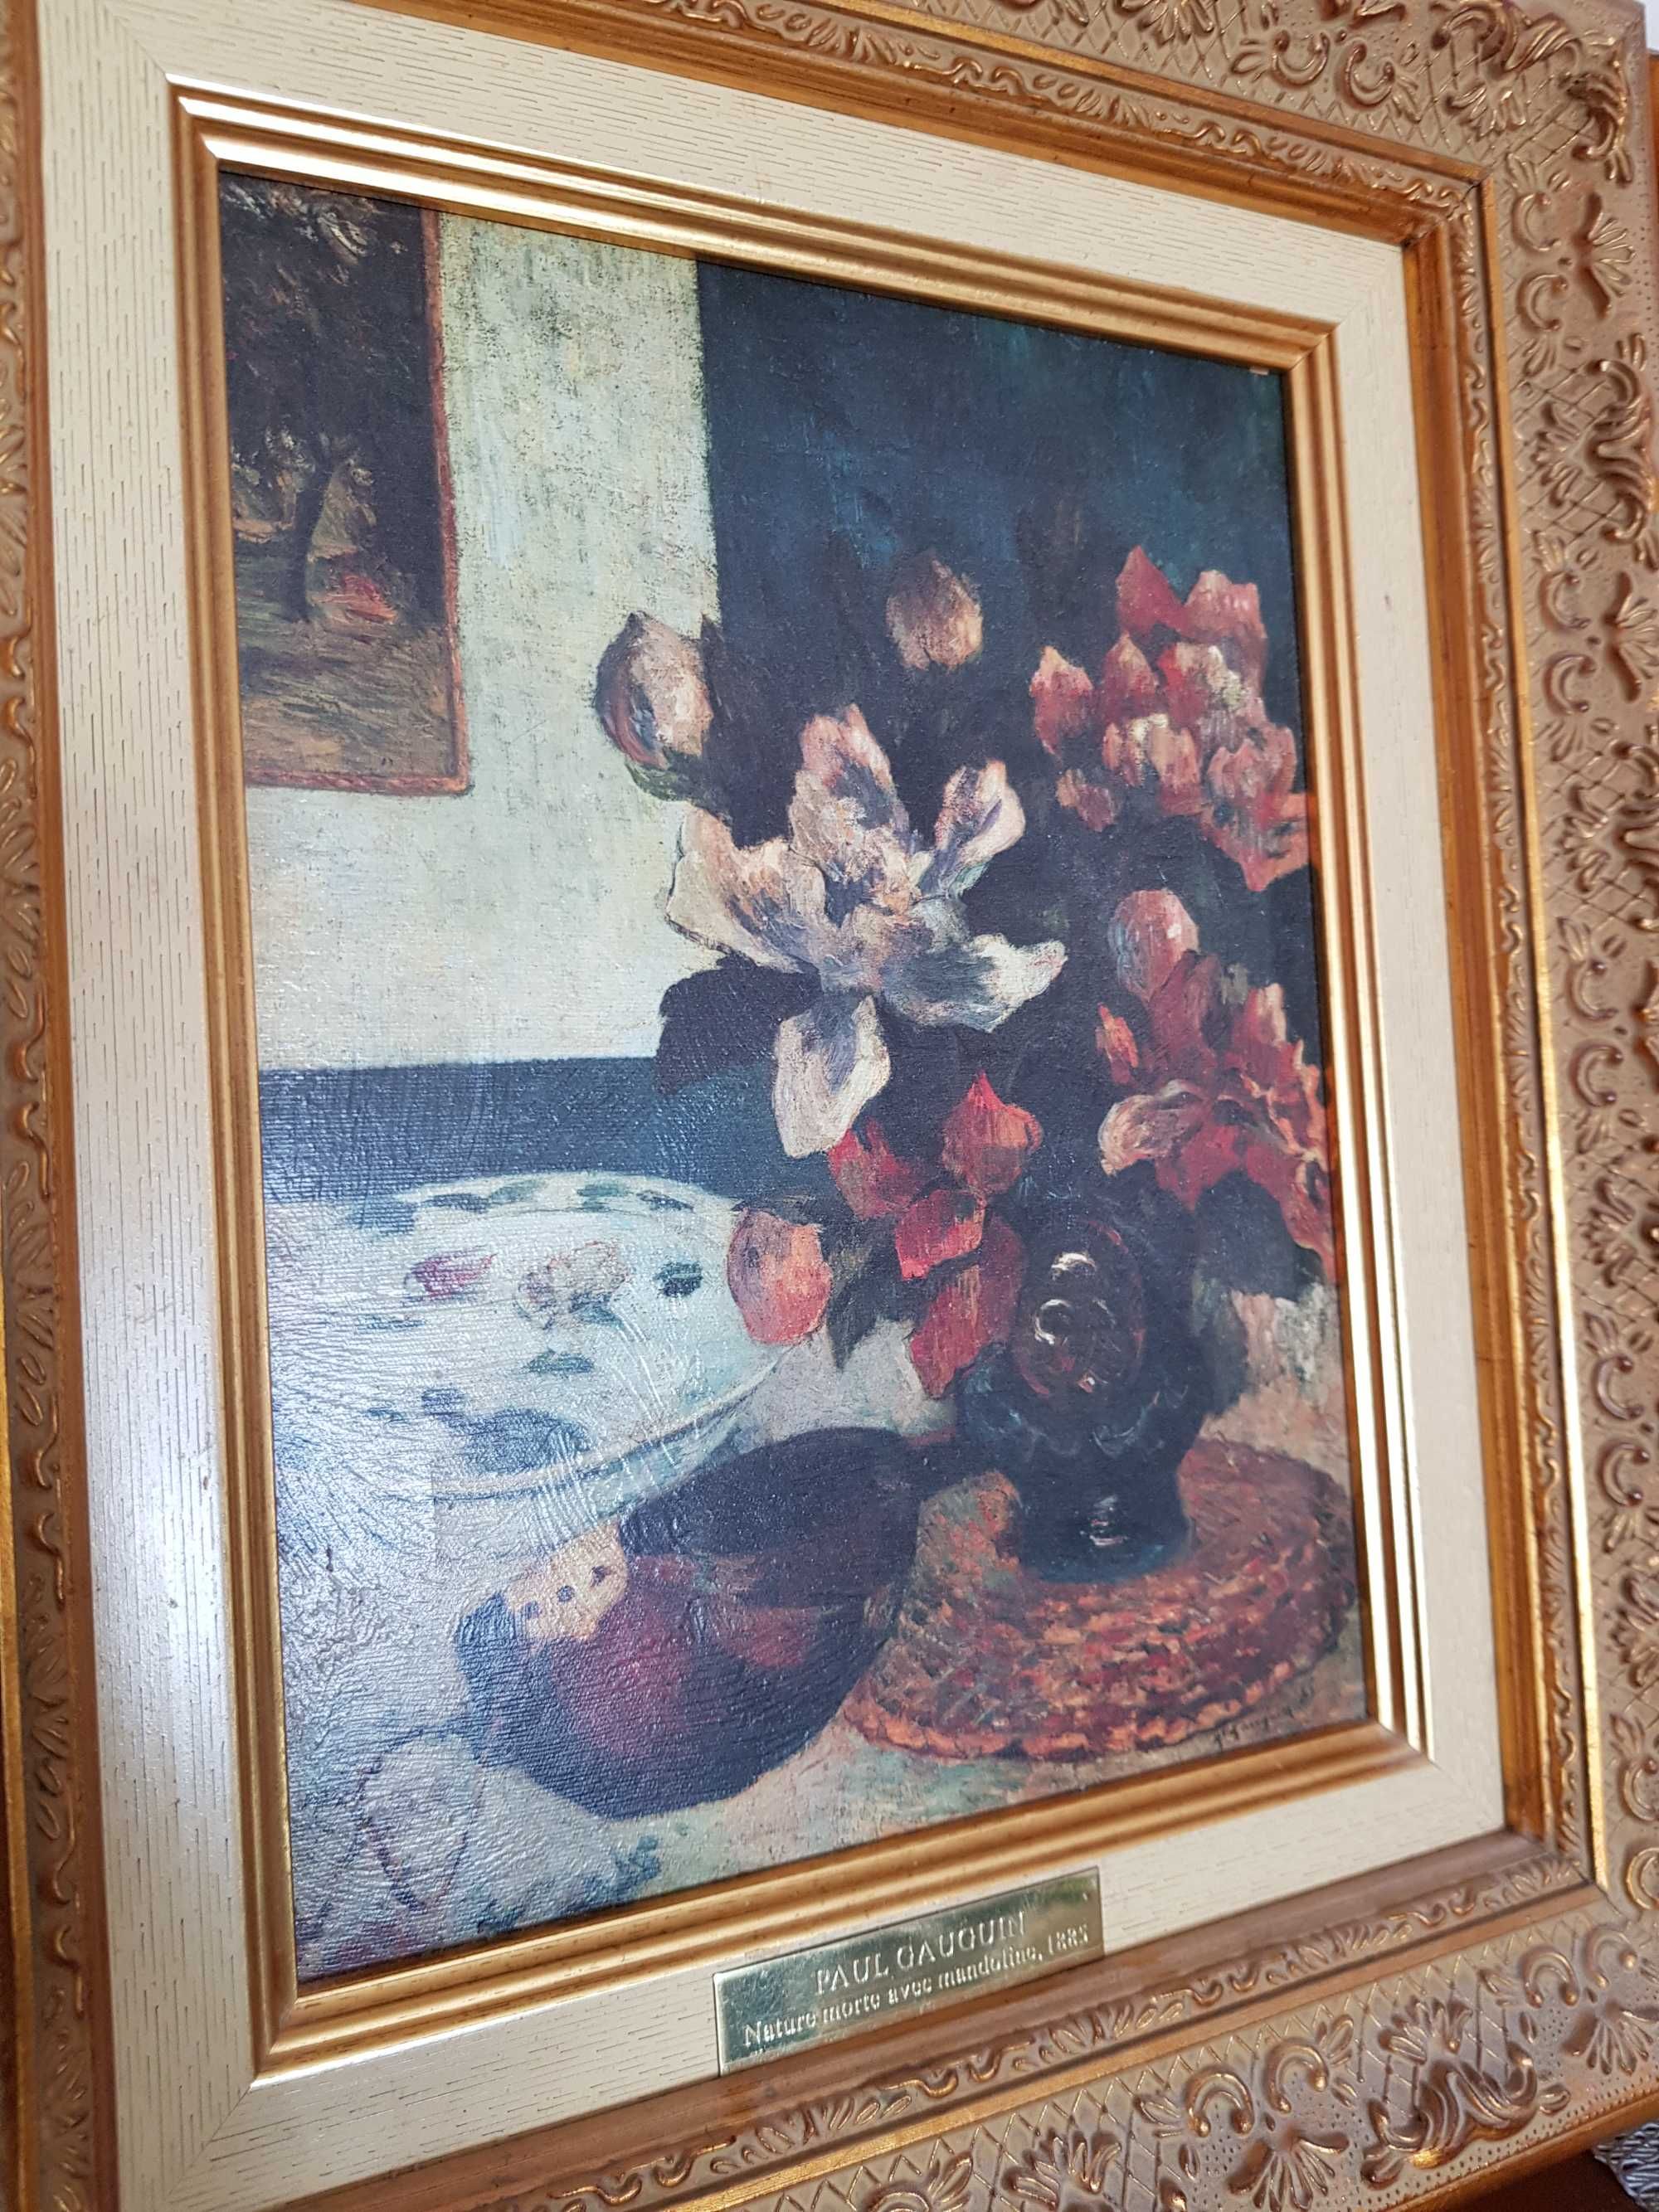 Obraz Paul Gauguin reprodukcja w pięknej ramie.